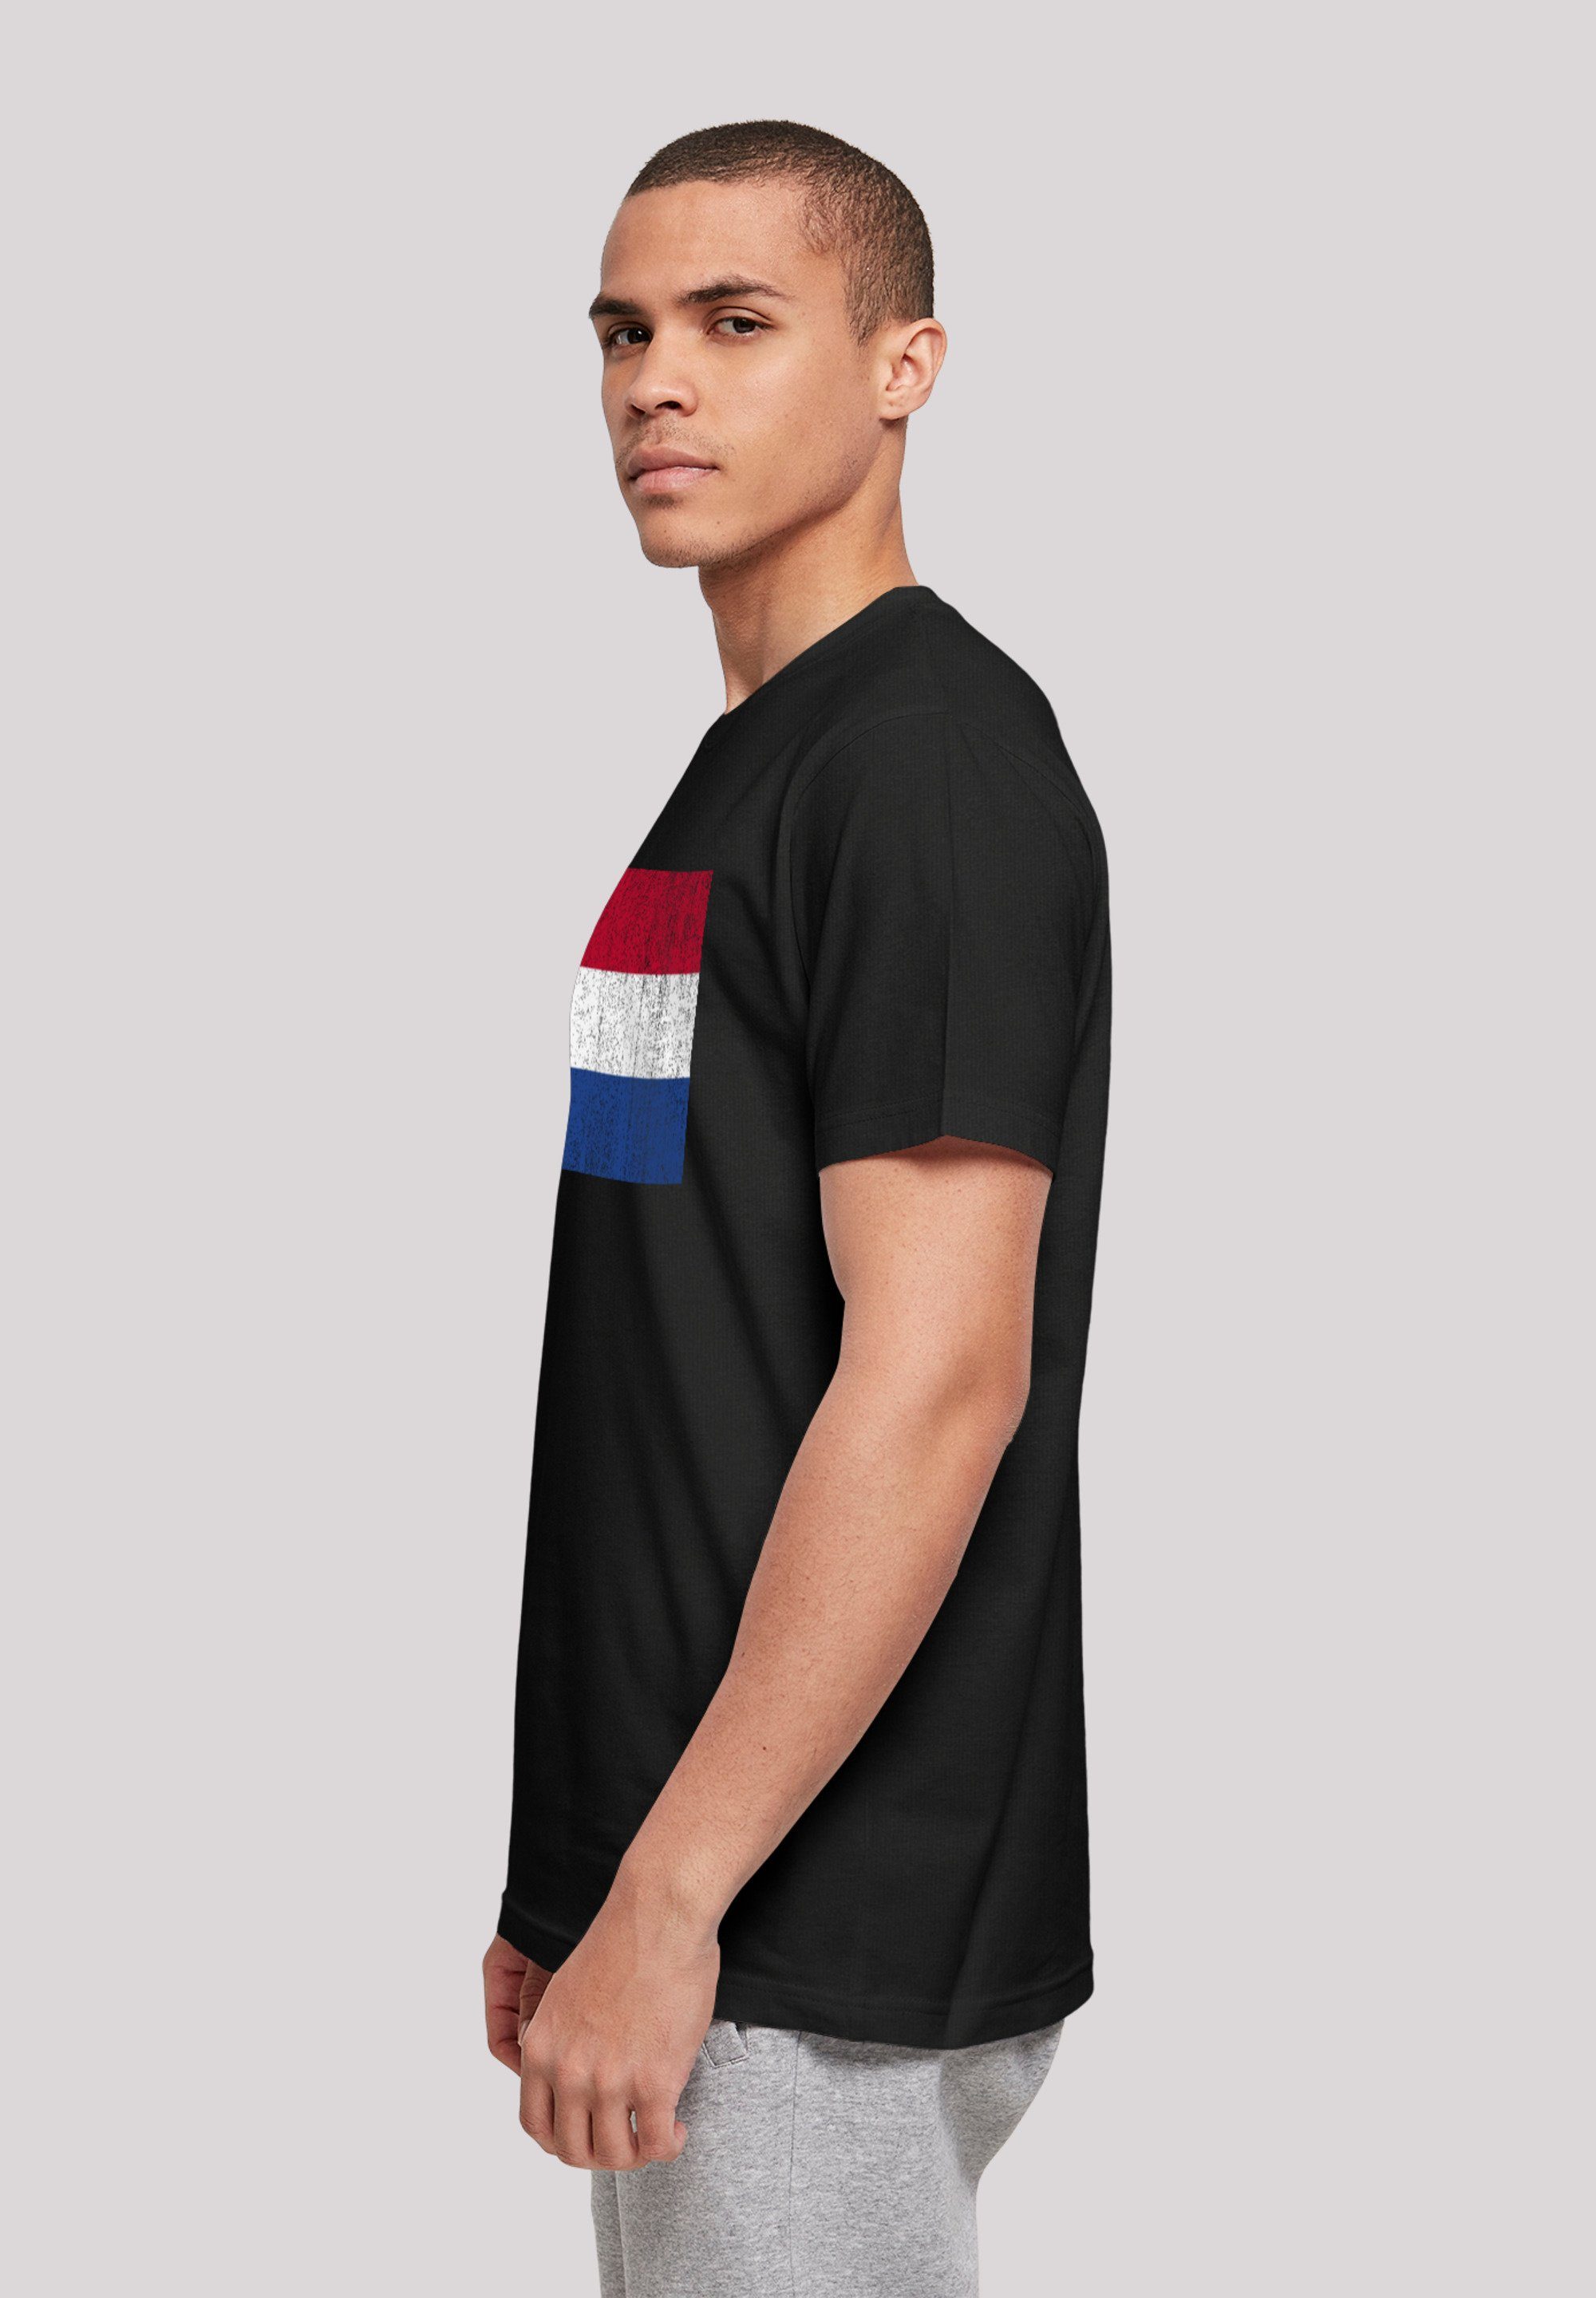 F4NT4STIC T-Shirt Holland schwarz distressed Flagge Niederlande Print